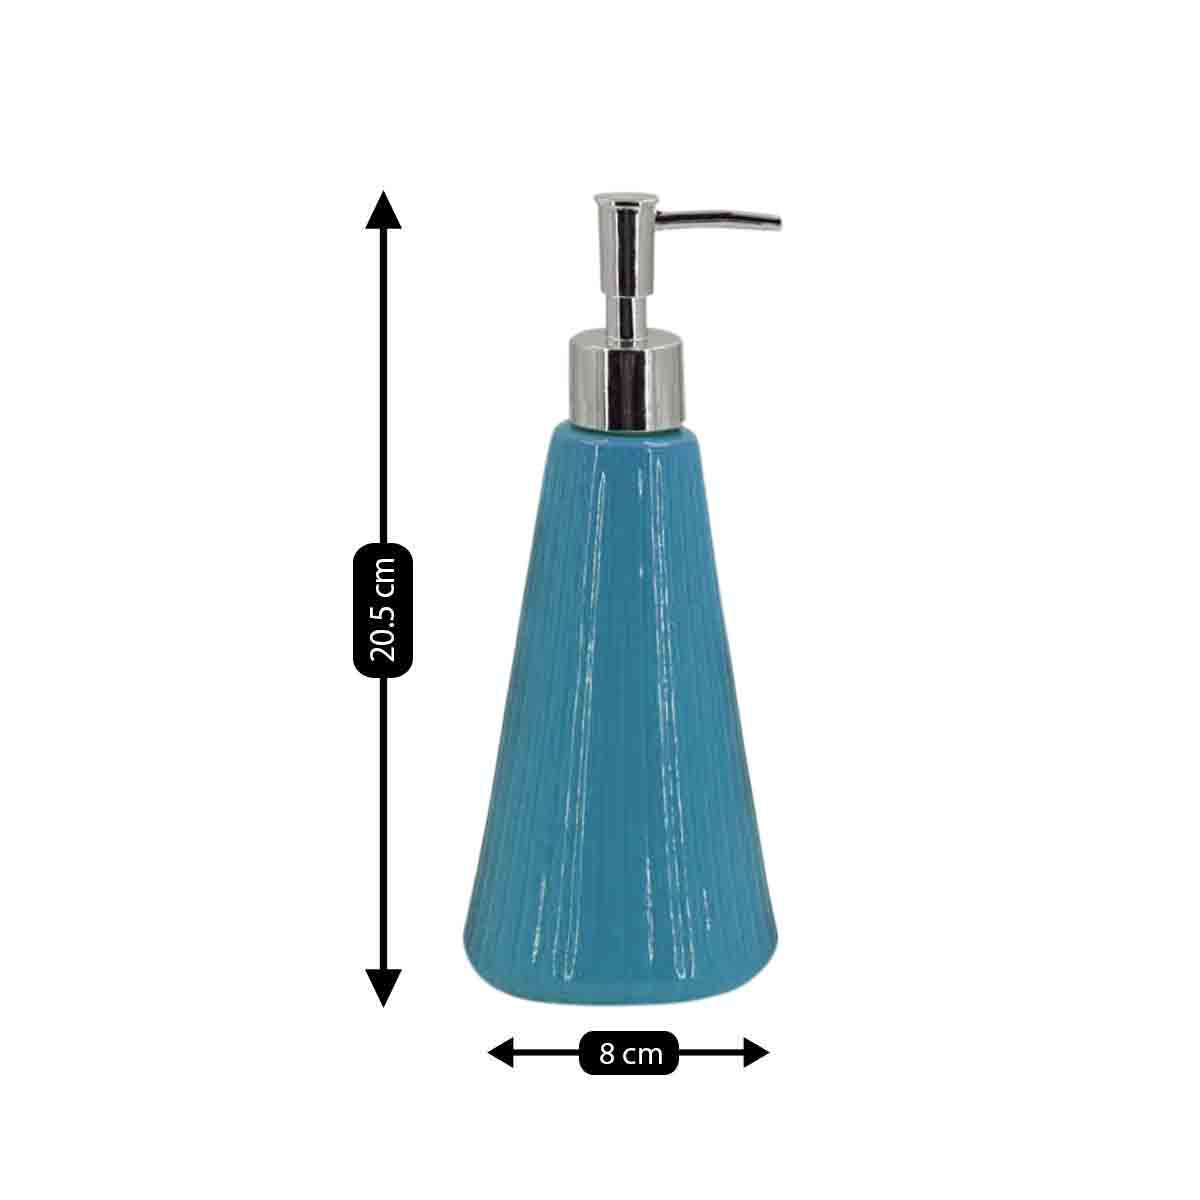 Ceramic Soap Dispenser Pump for Bathroom for Bath Gel, Lotion, Shampoo (6038)